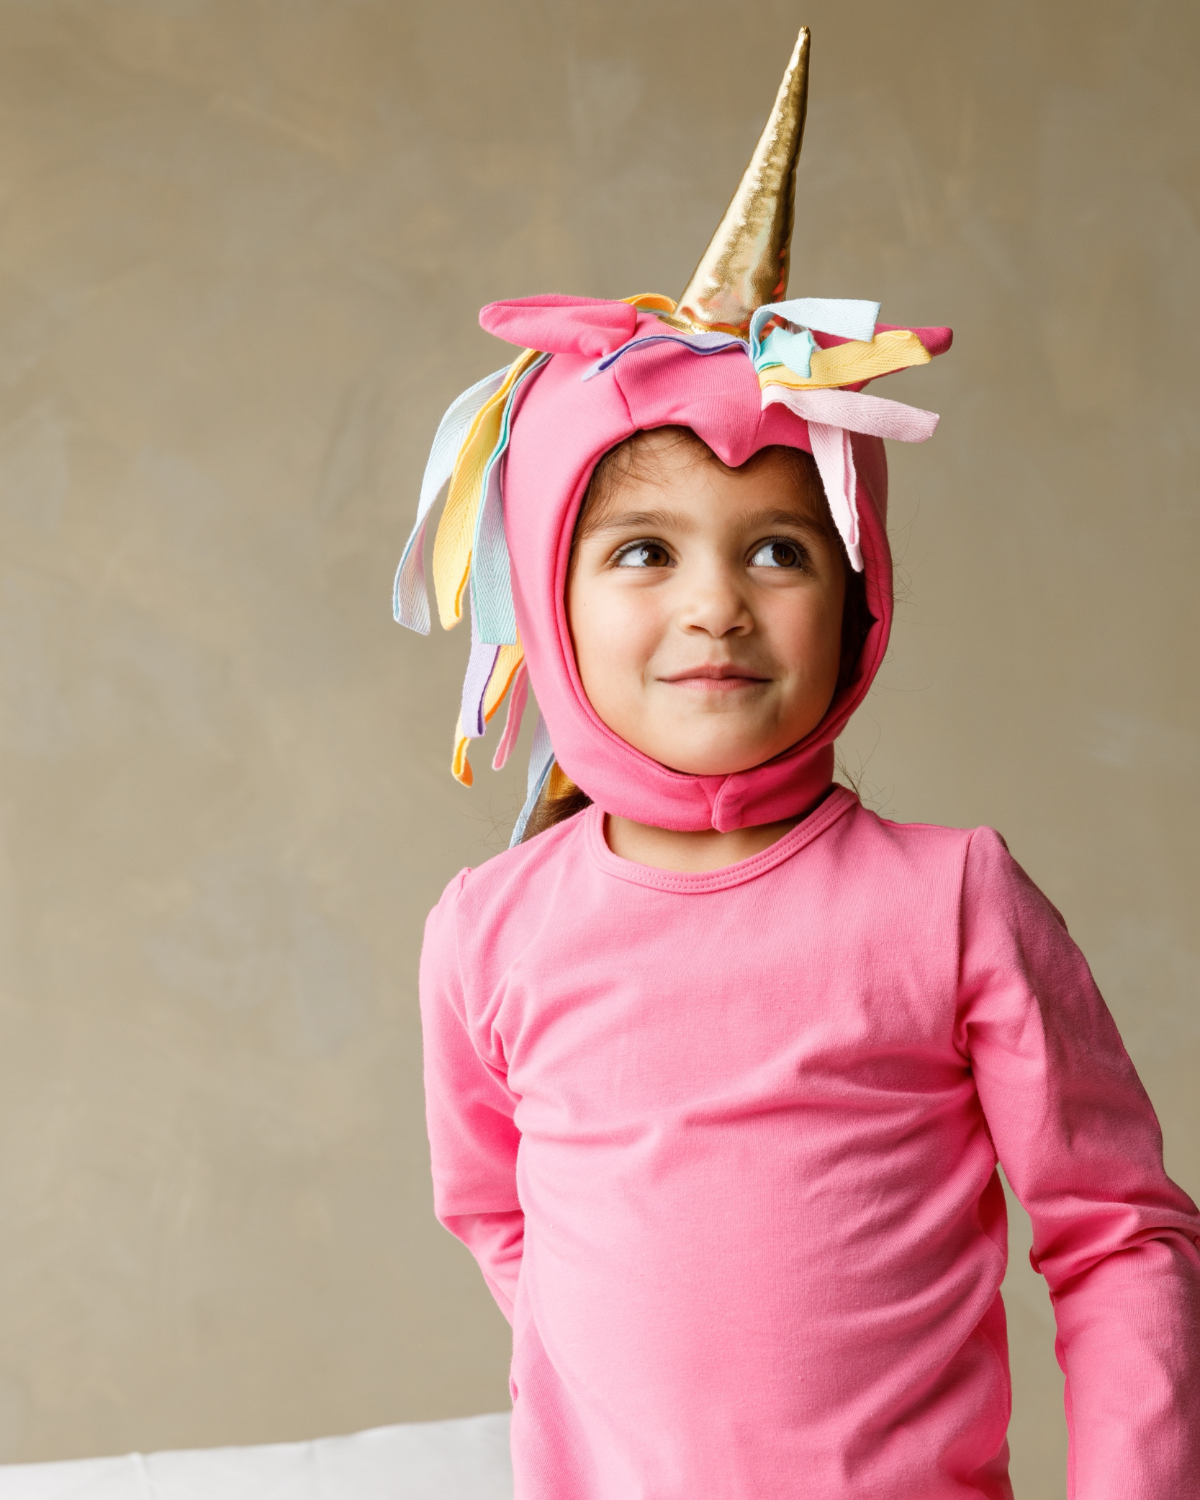 Pink Unicorn Costume